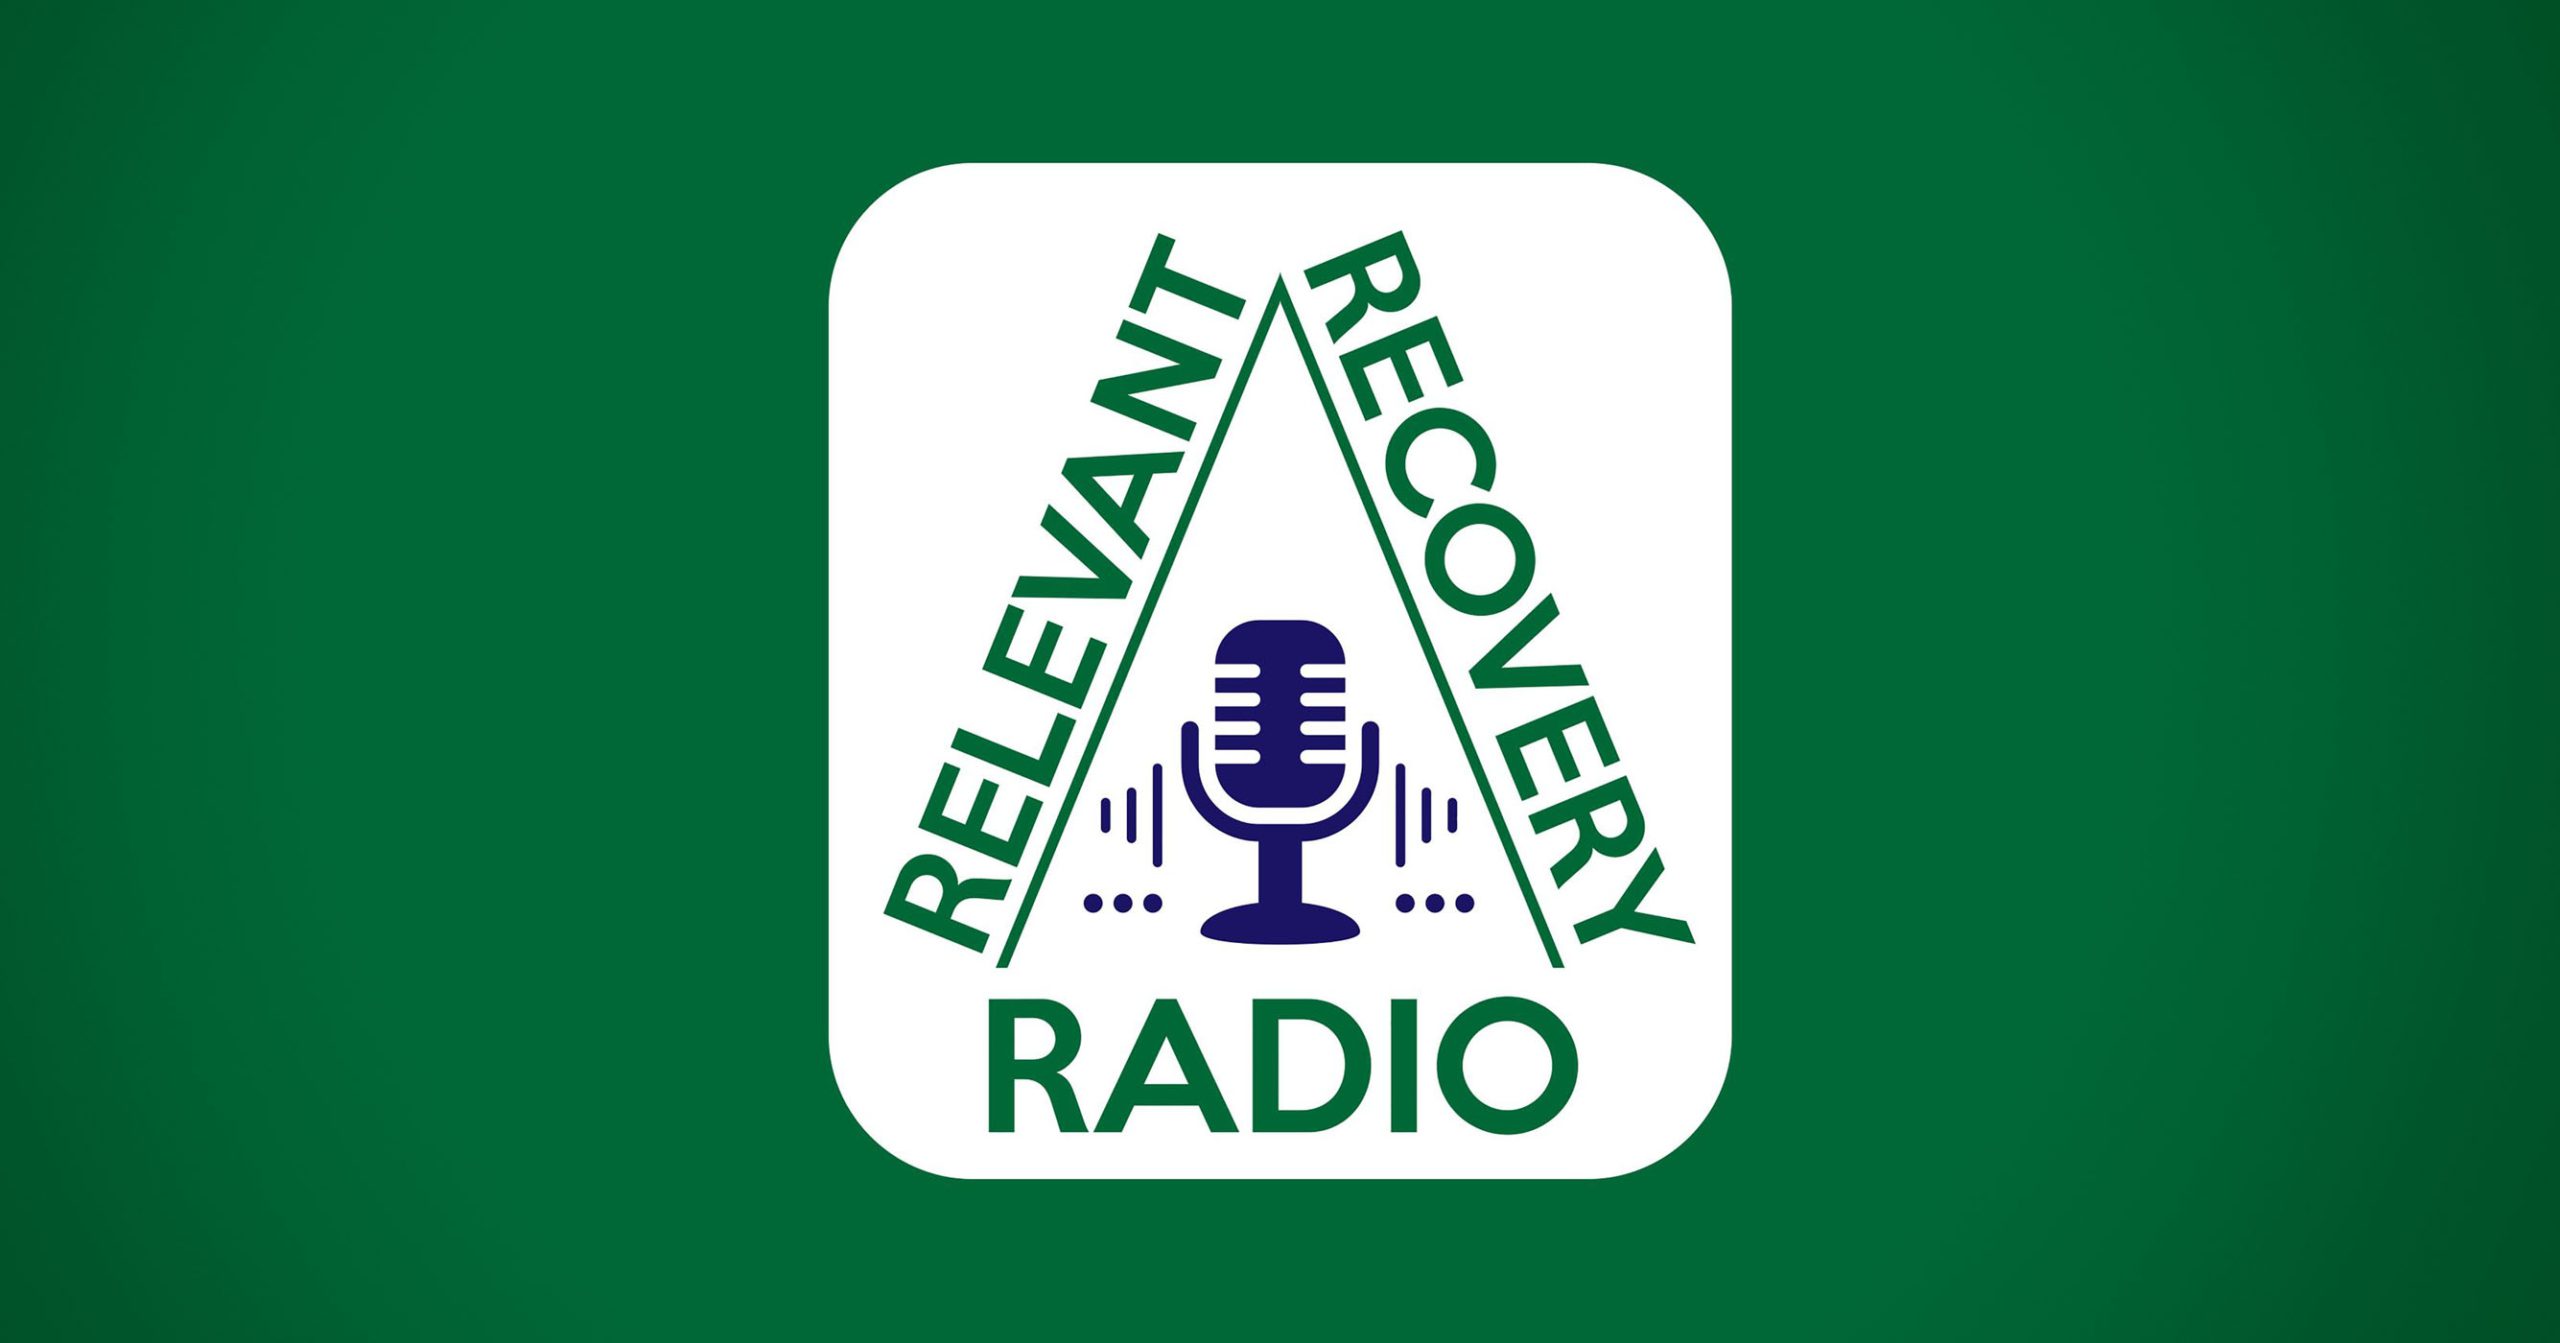 Relevant Recovery Radio Podcast Logo